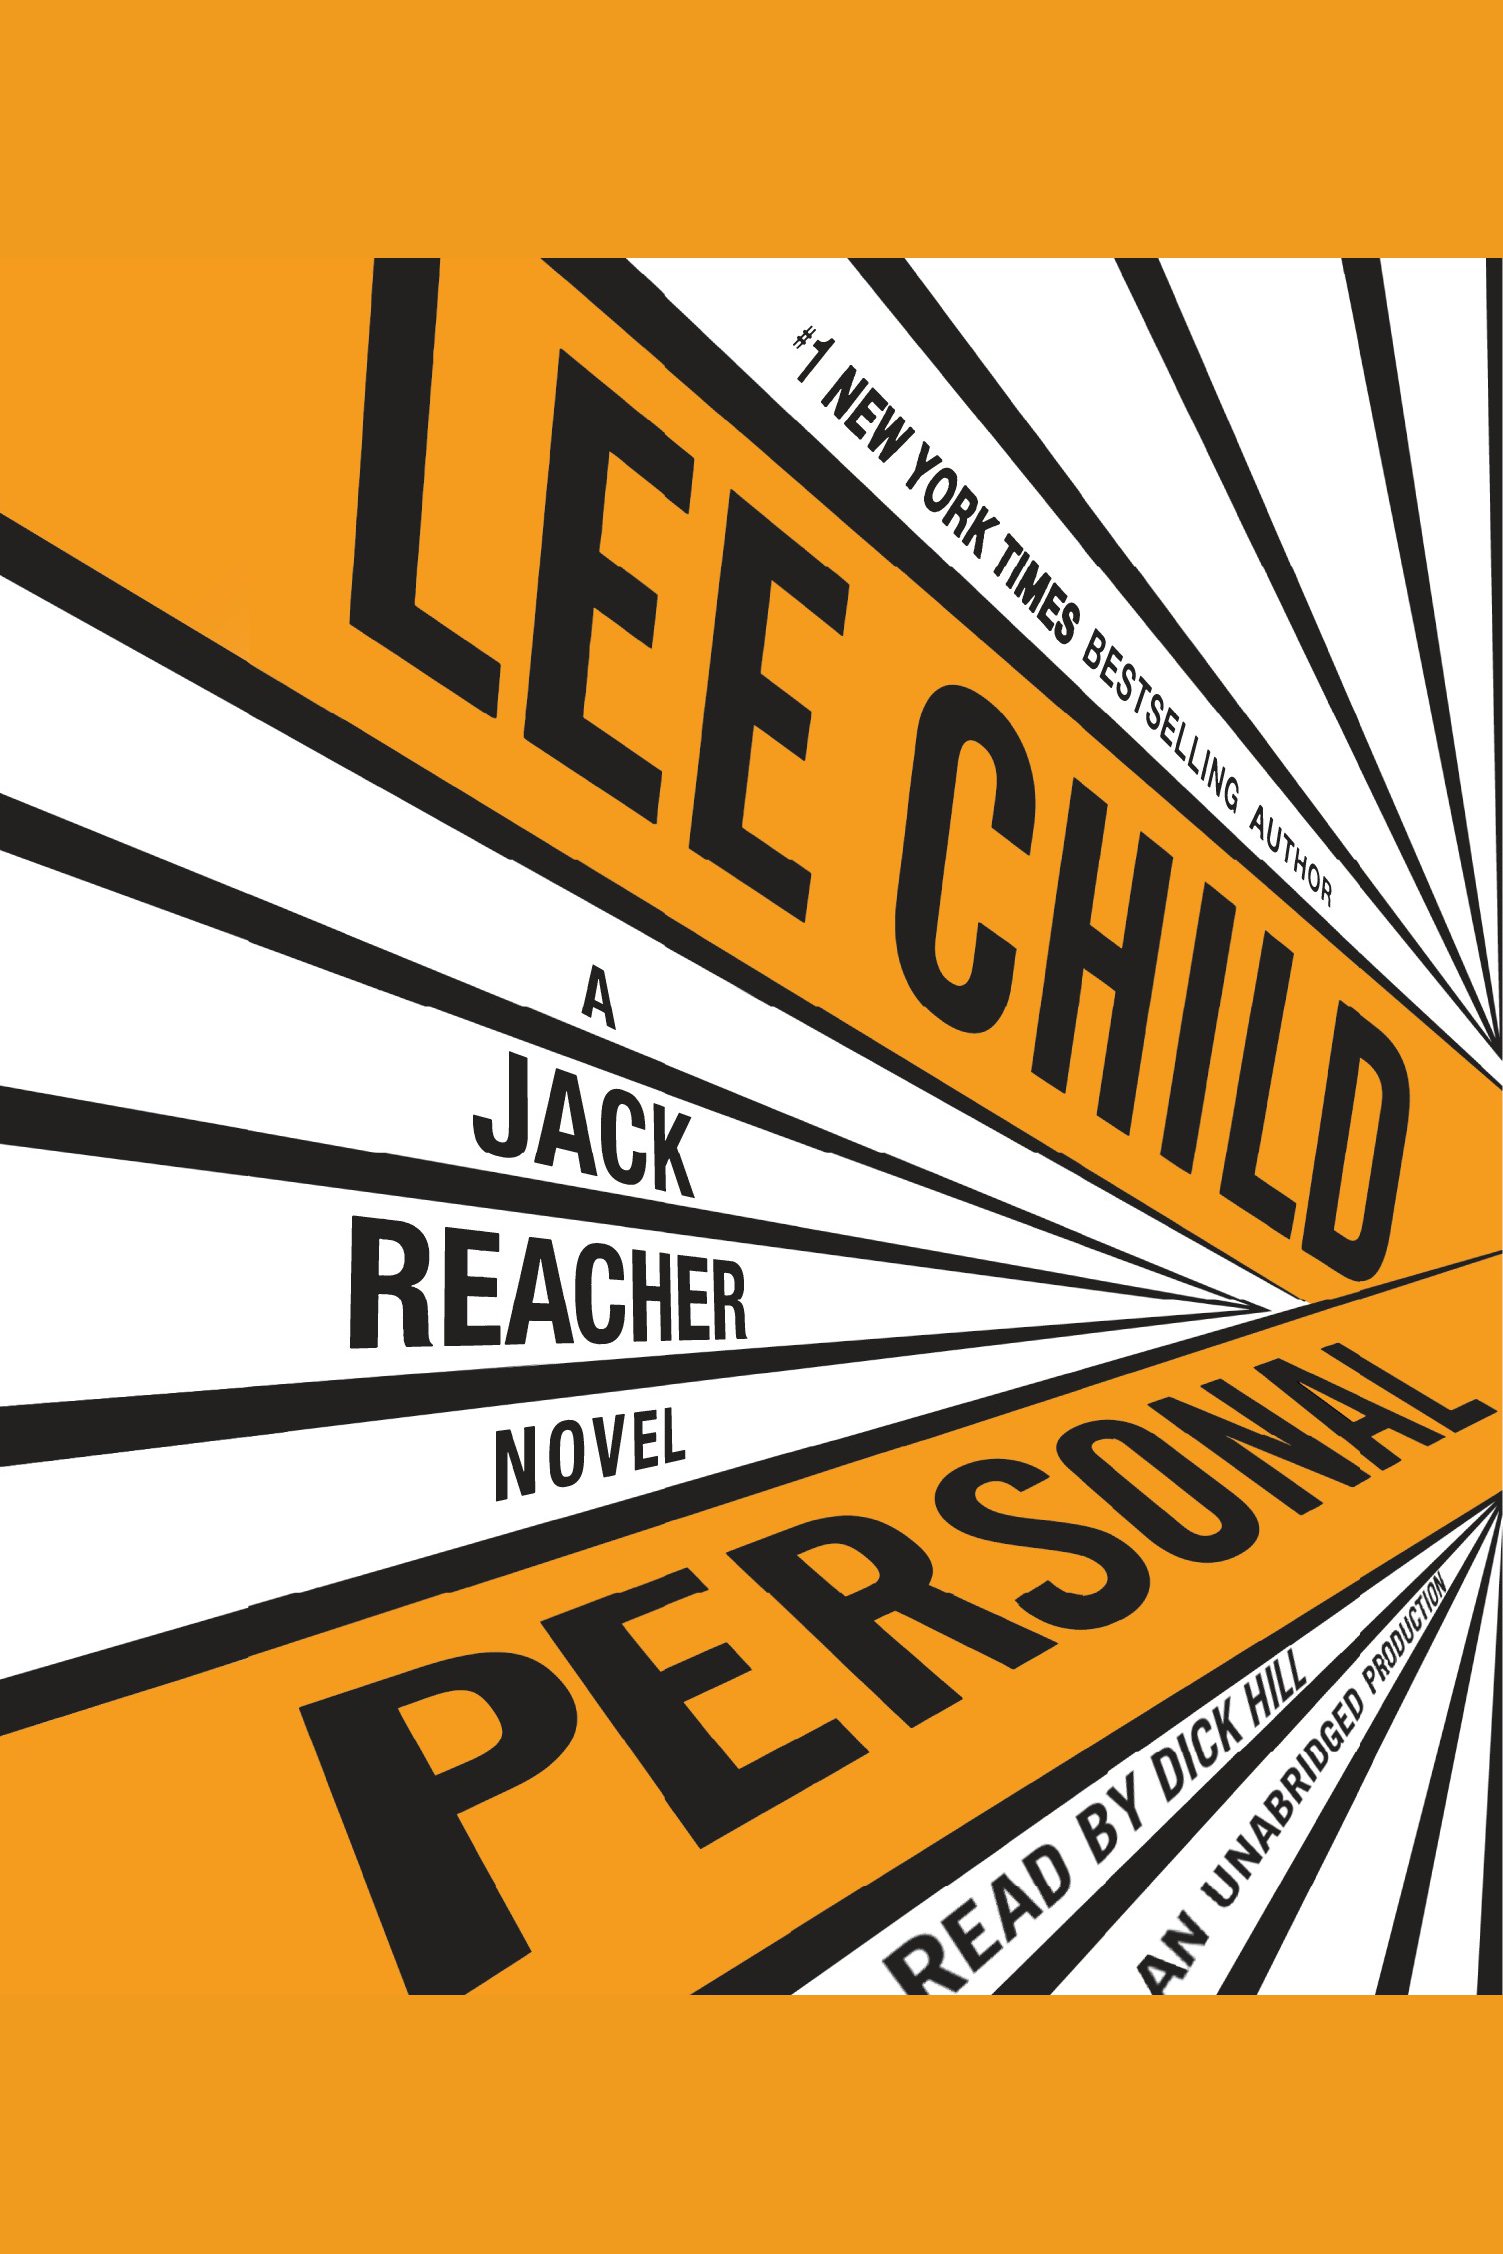 Personal A Jack Reacher novel cover image